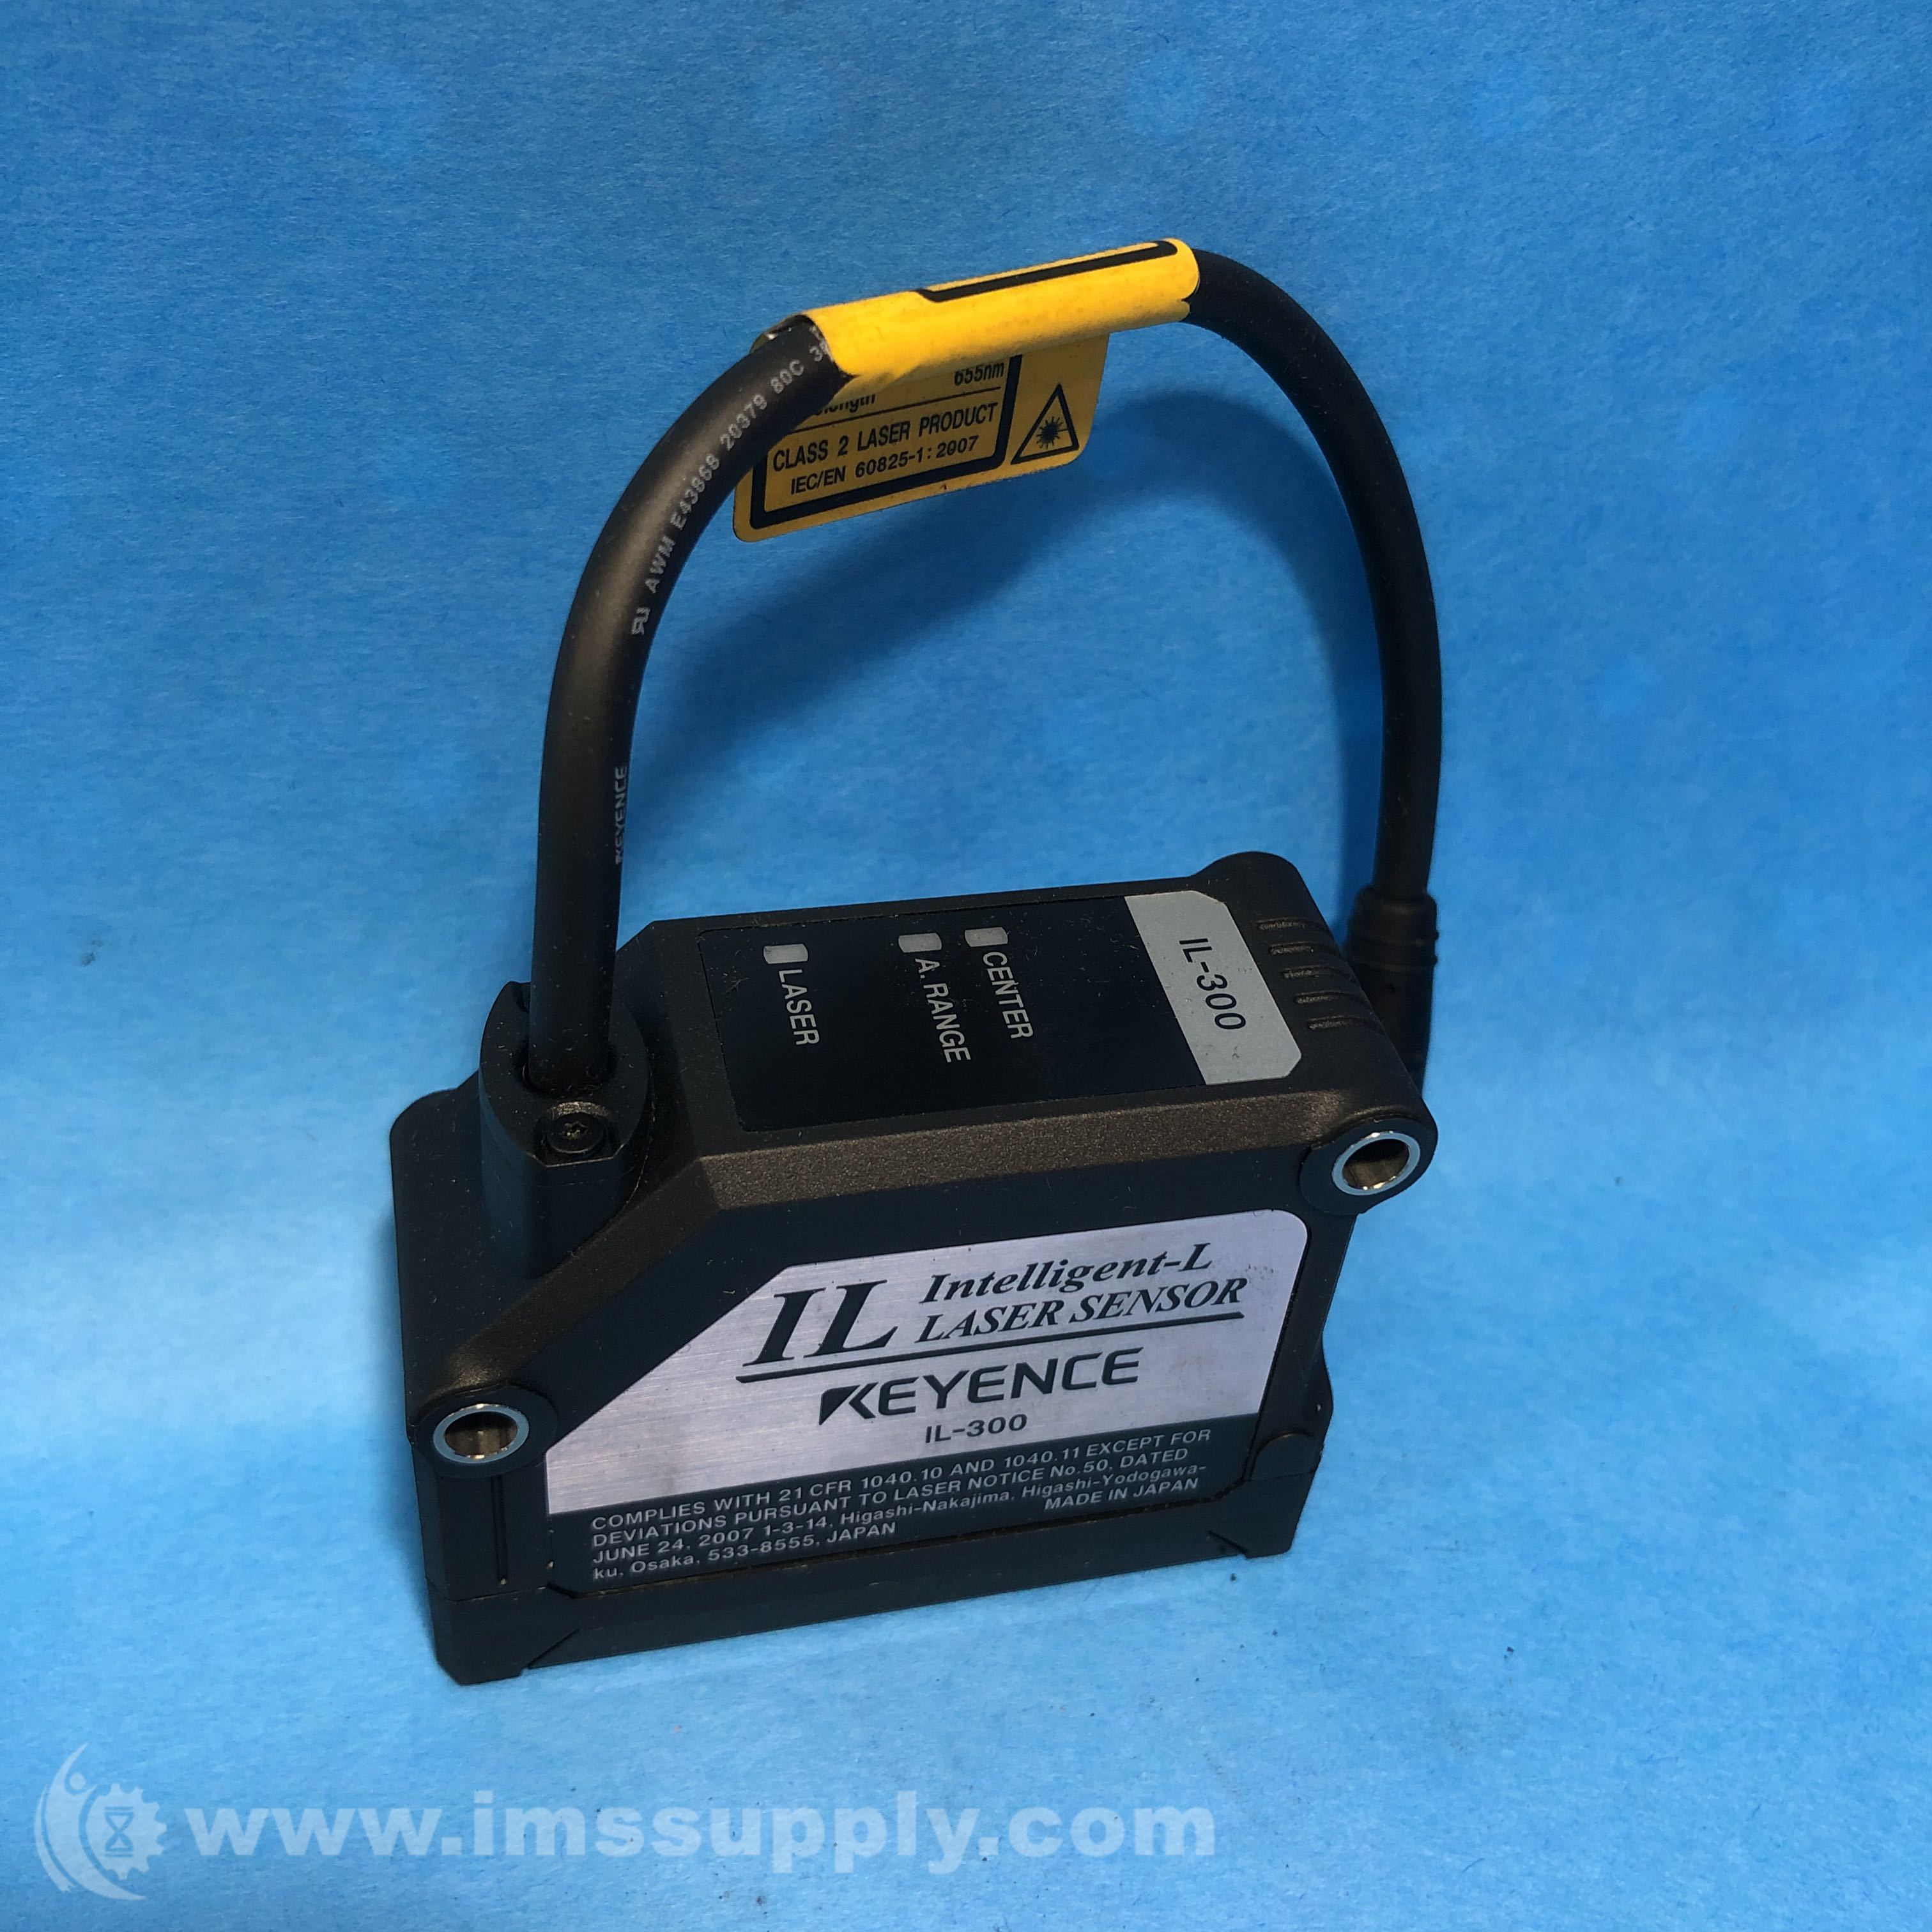 Keyence IL-300 Laser Sensor Head - IMS Supply